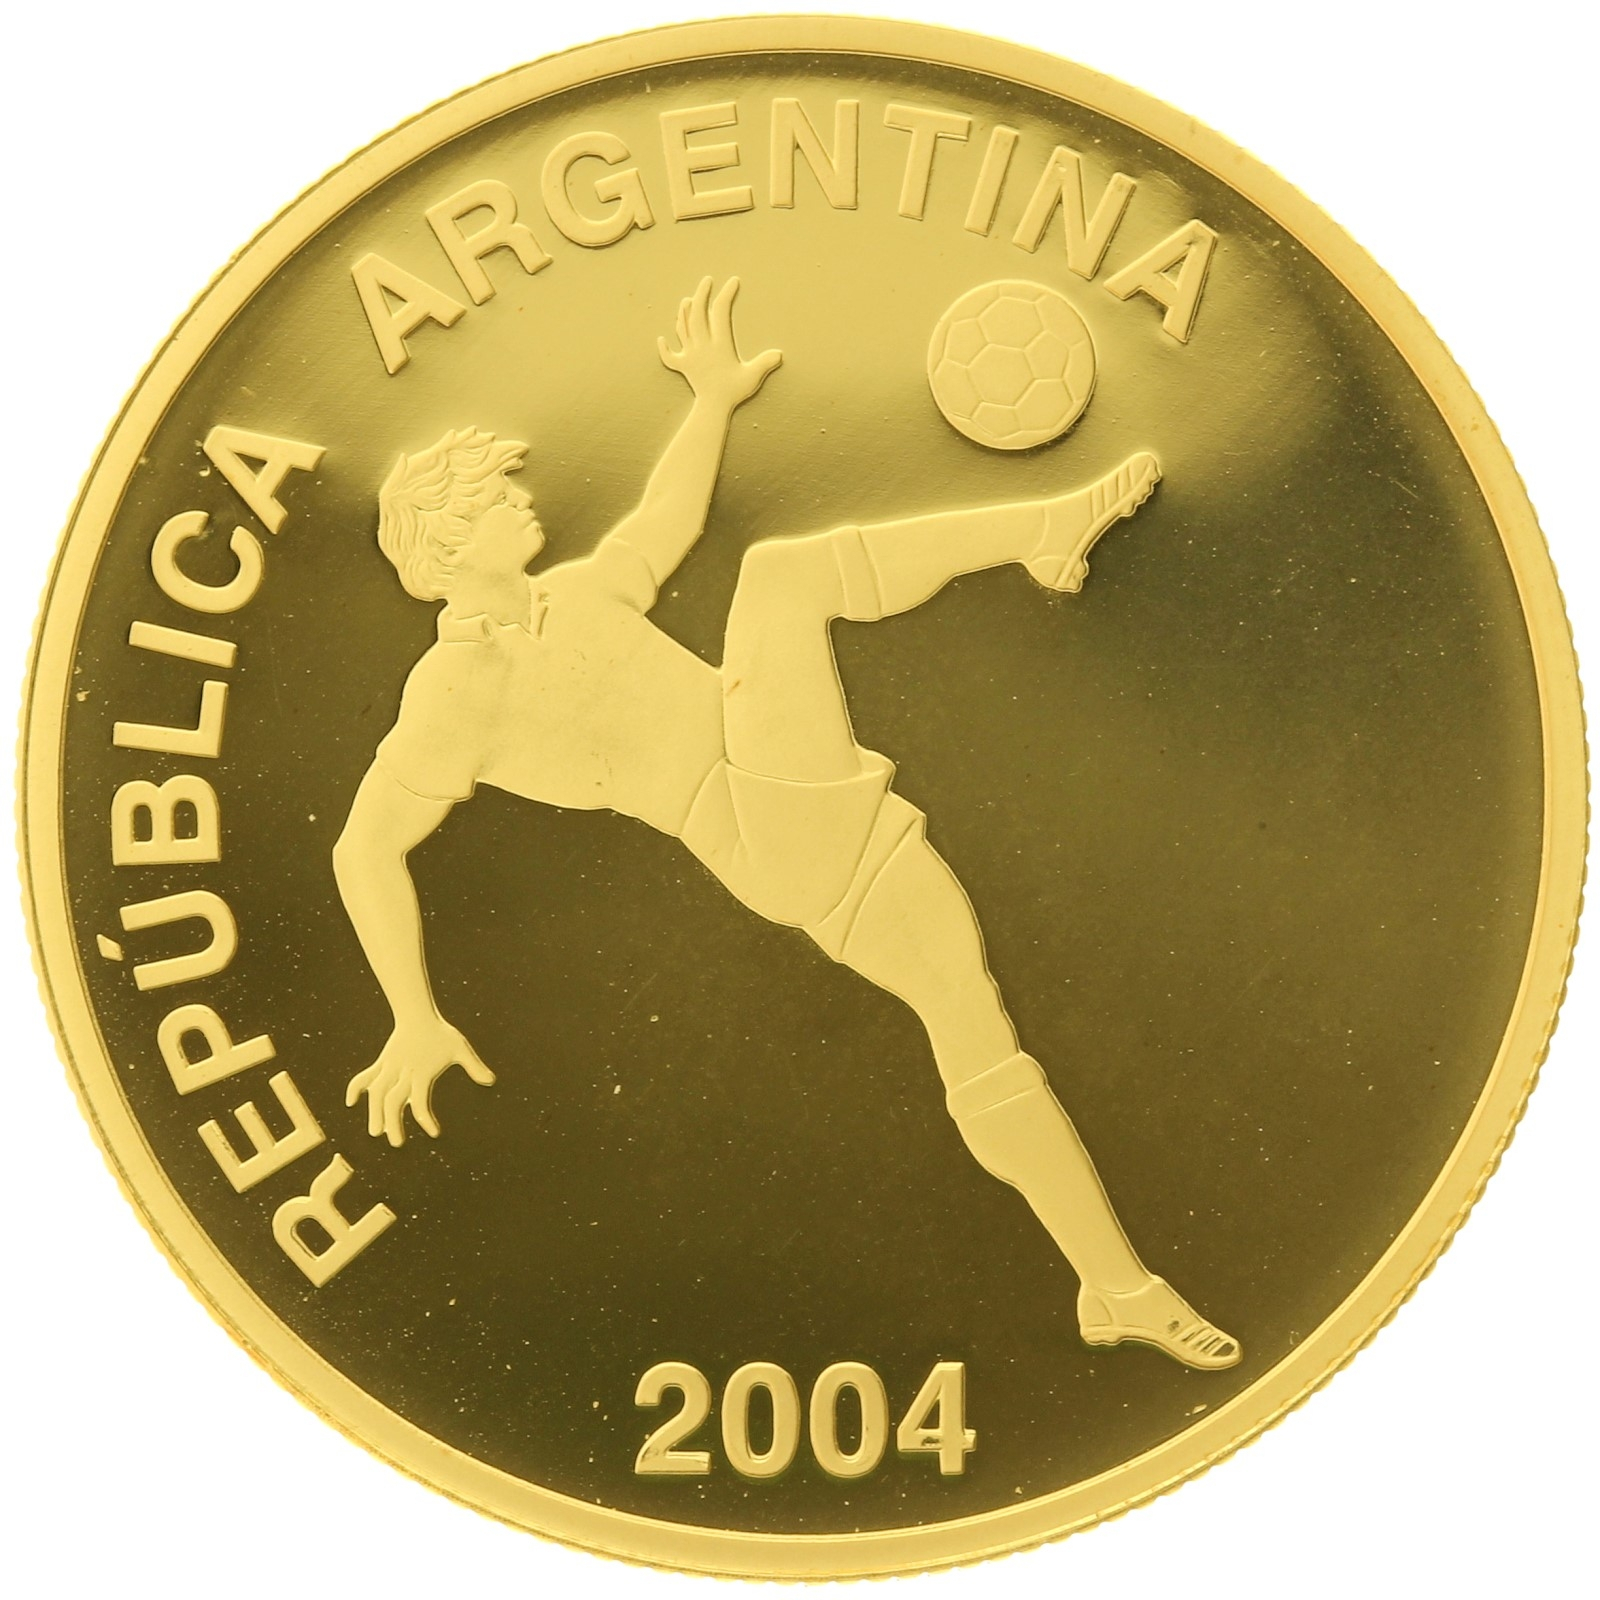 Argentina - 10 pesos - 2004 - World Cup 2006